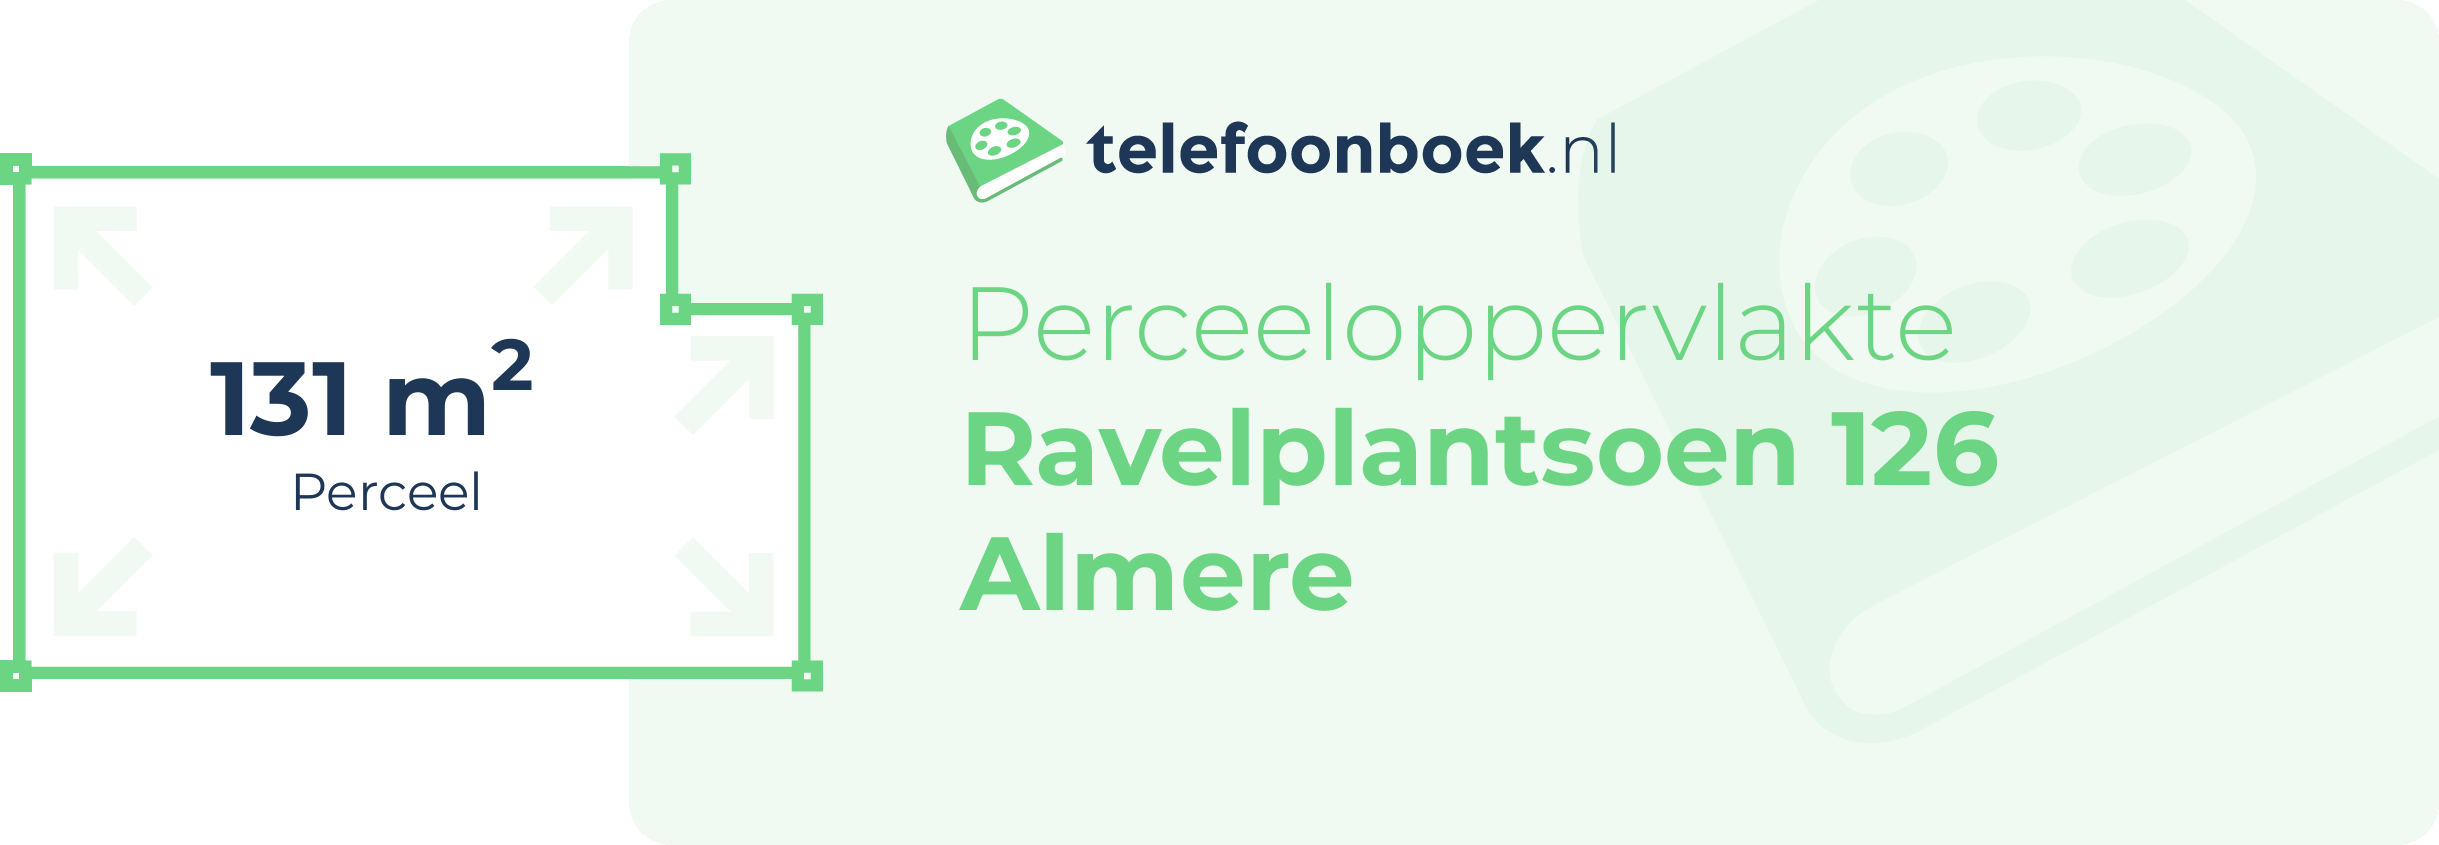 Perceeloppervlakte Ravelplantsoen 126 Almere